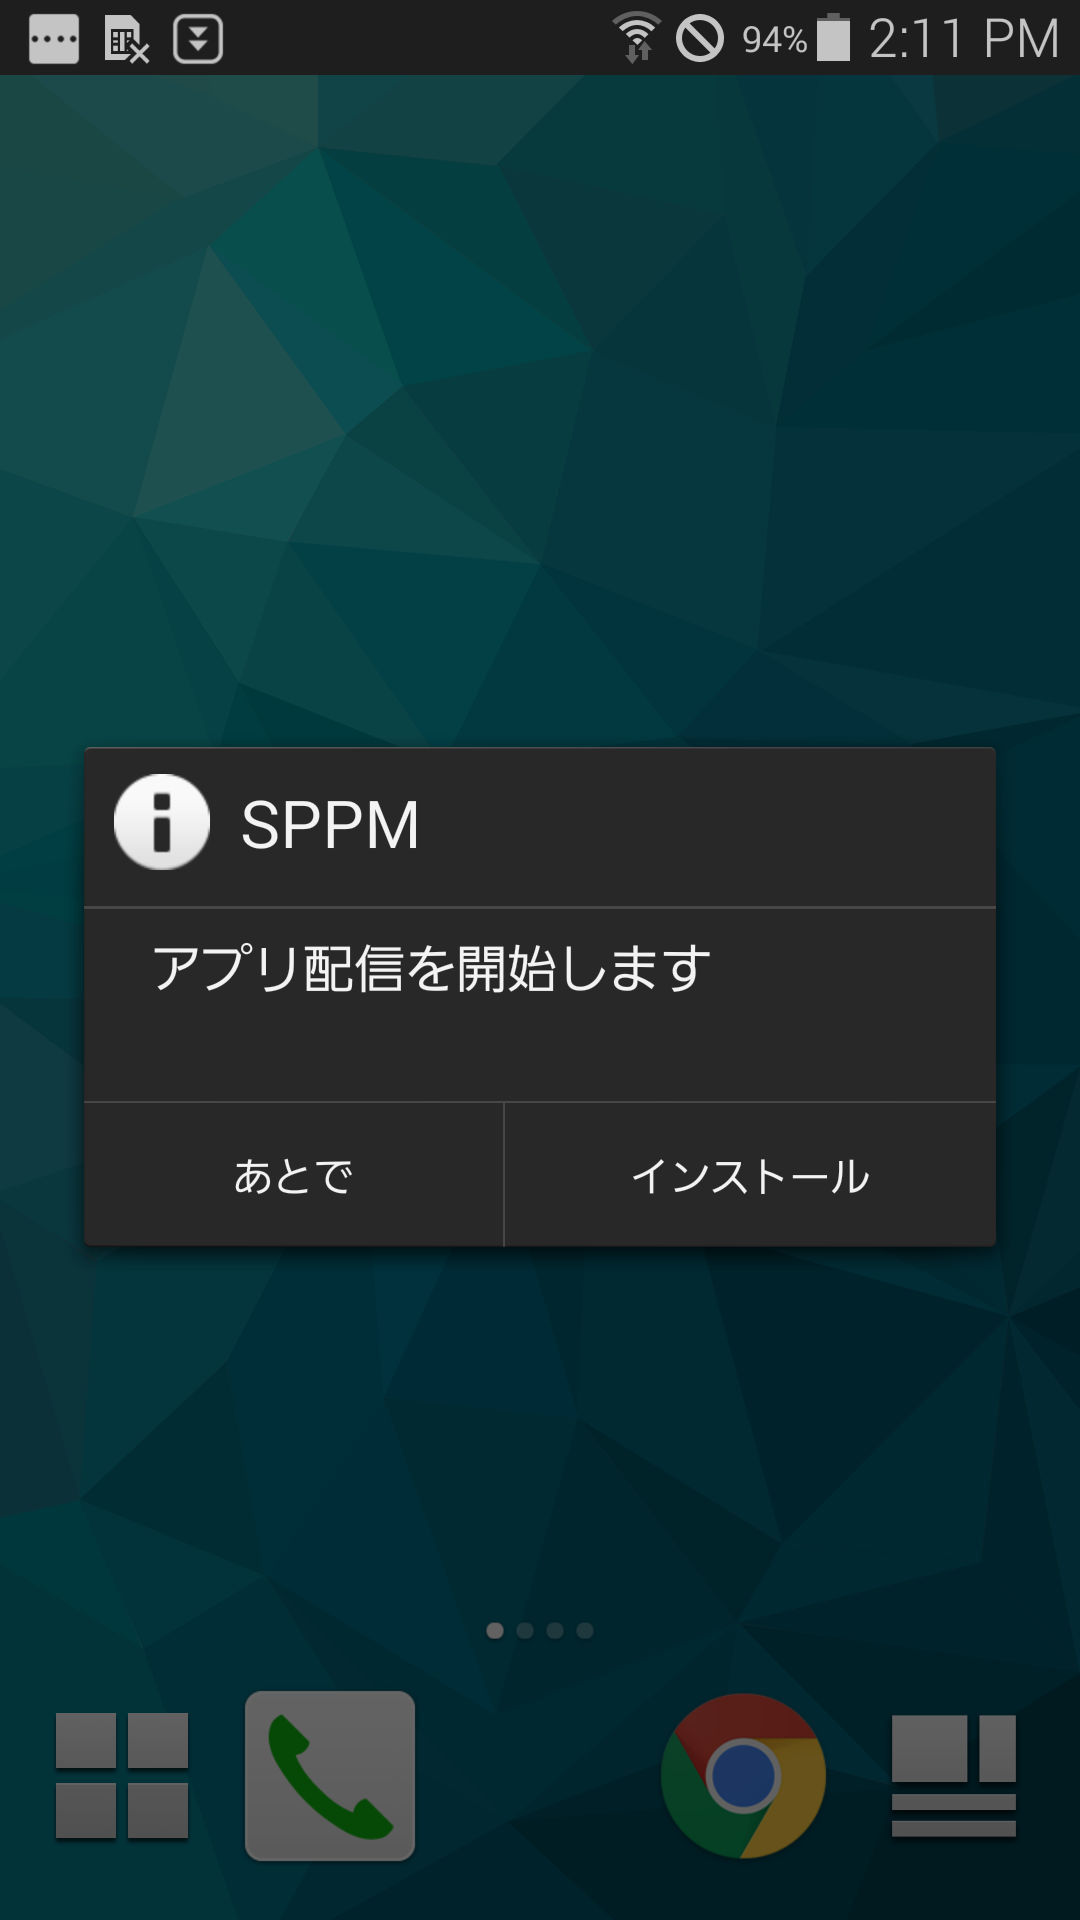 Android application MDM - SPPM Agent screenshort